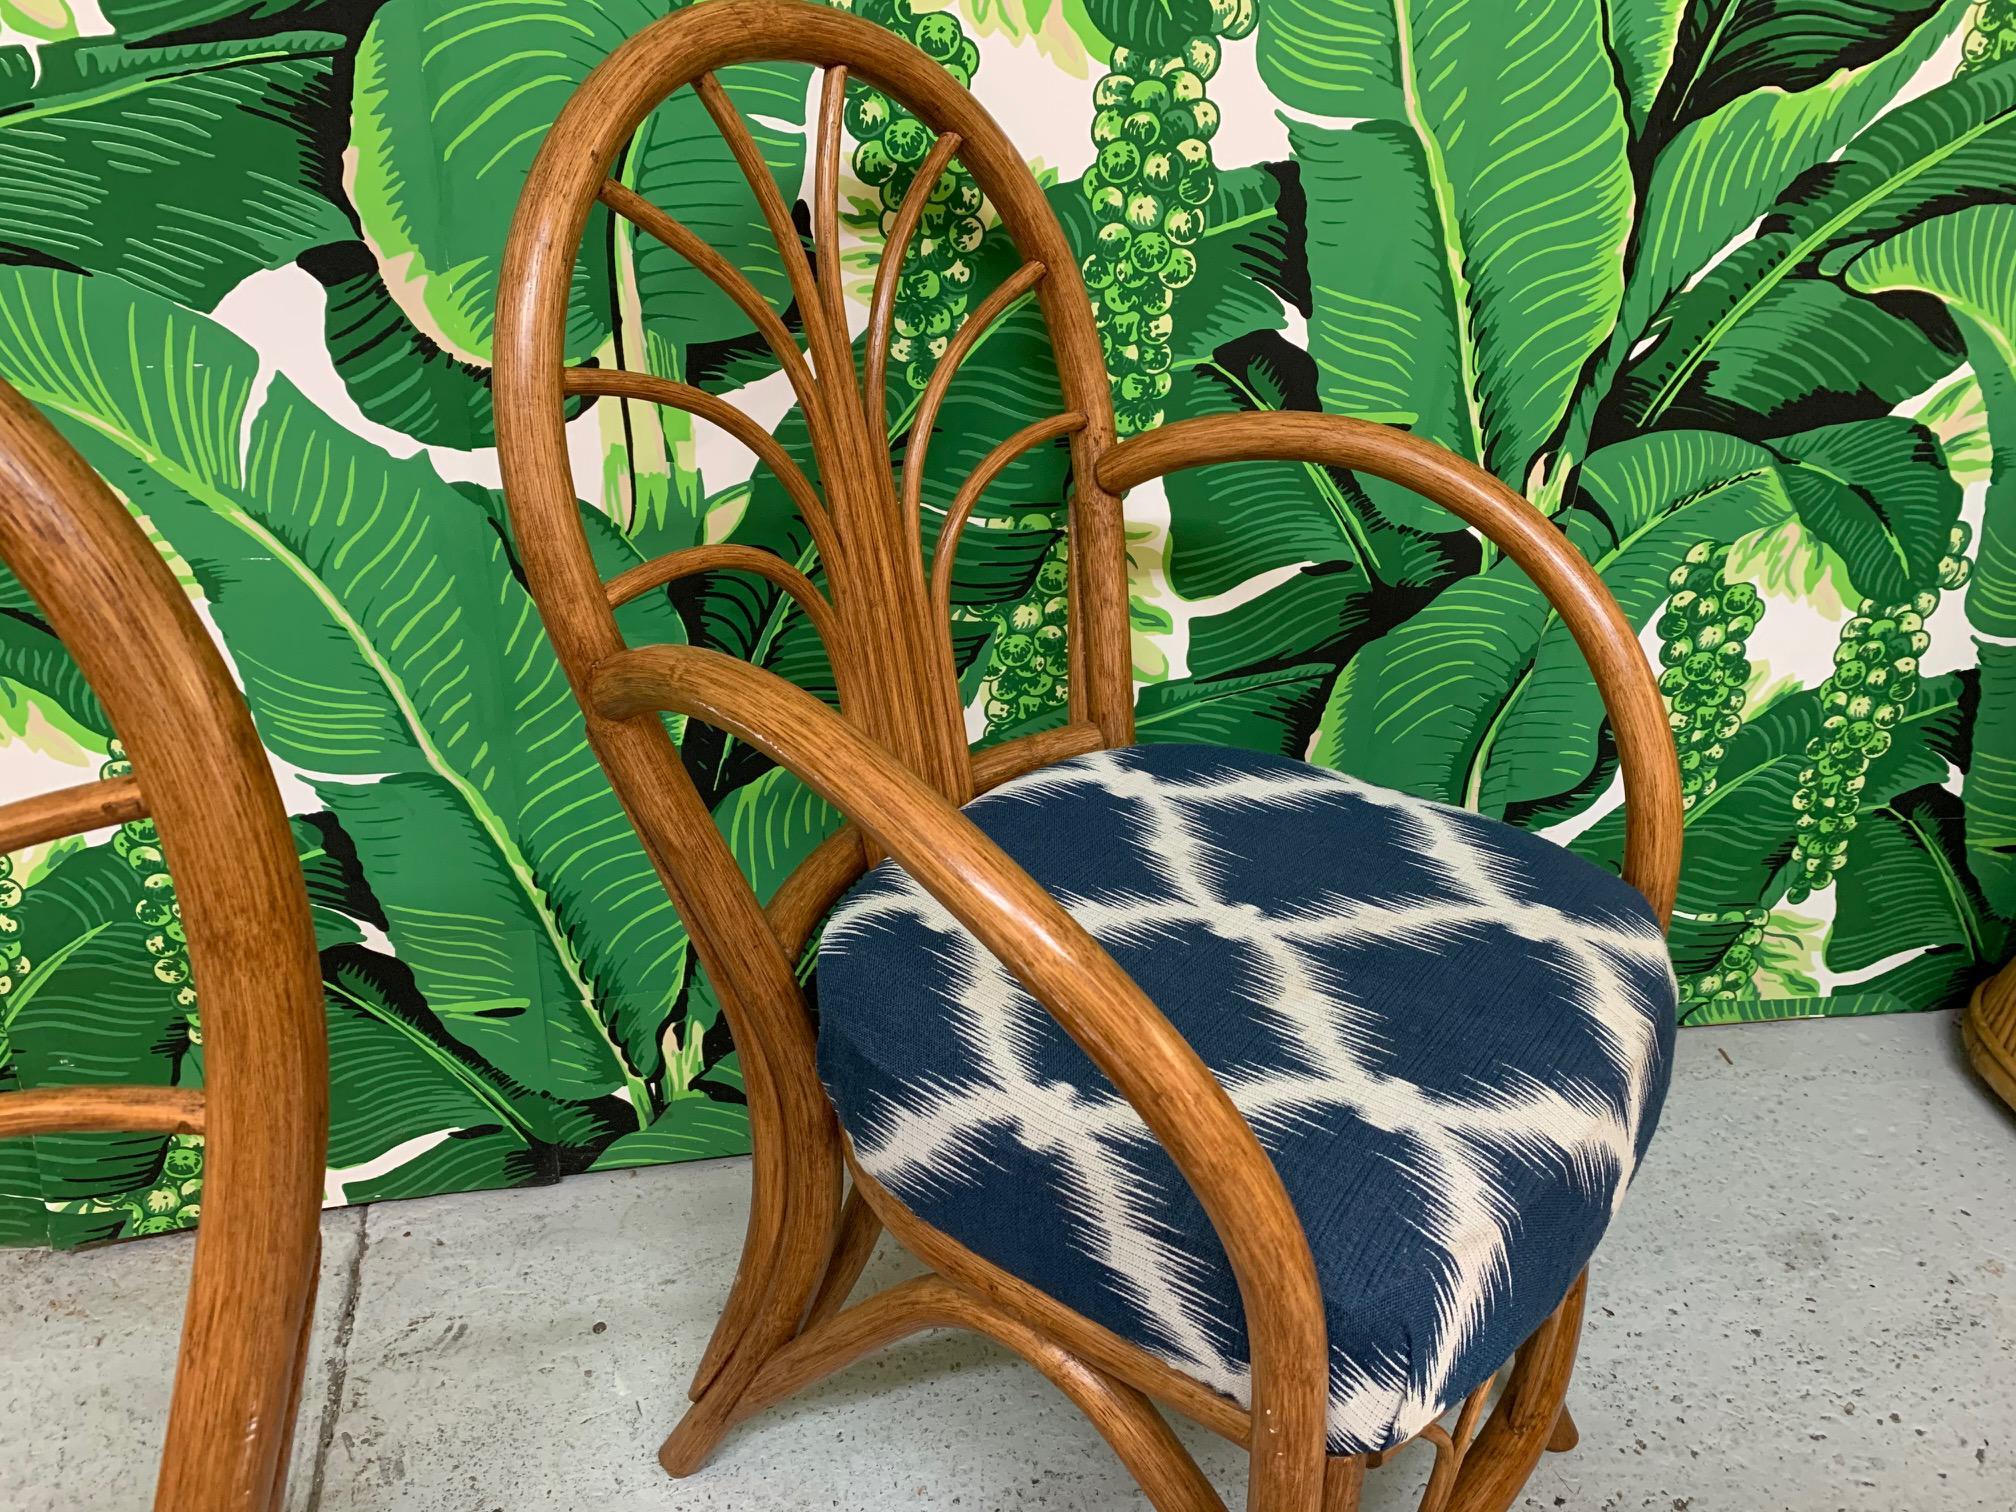 vintage rattan dining chairs -china -b2b -forum -blog -wikipedia -.cn -.gov -alibaba